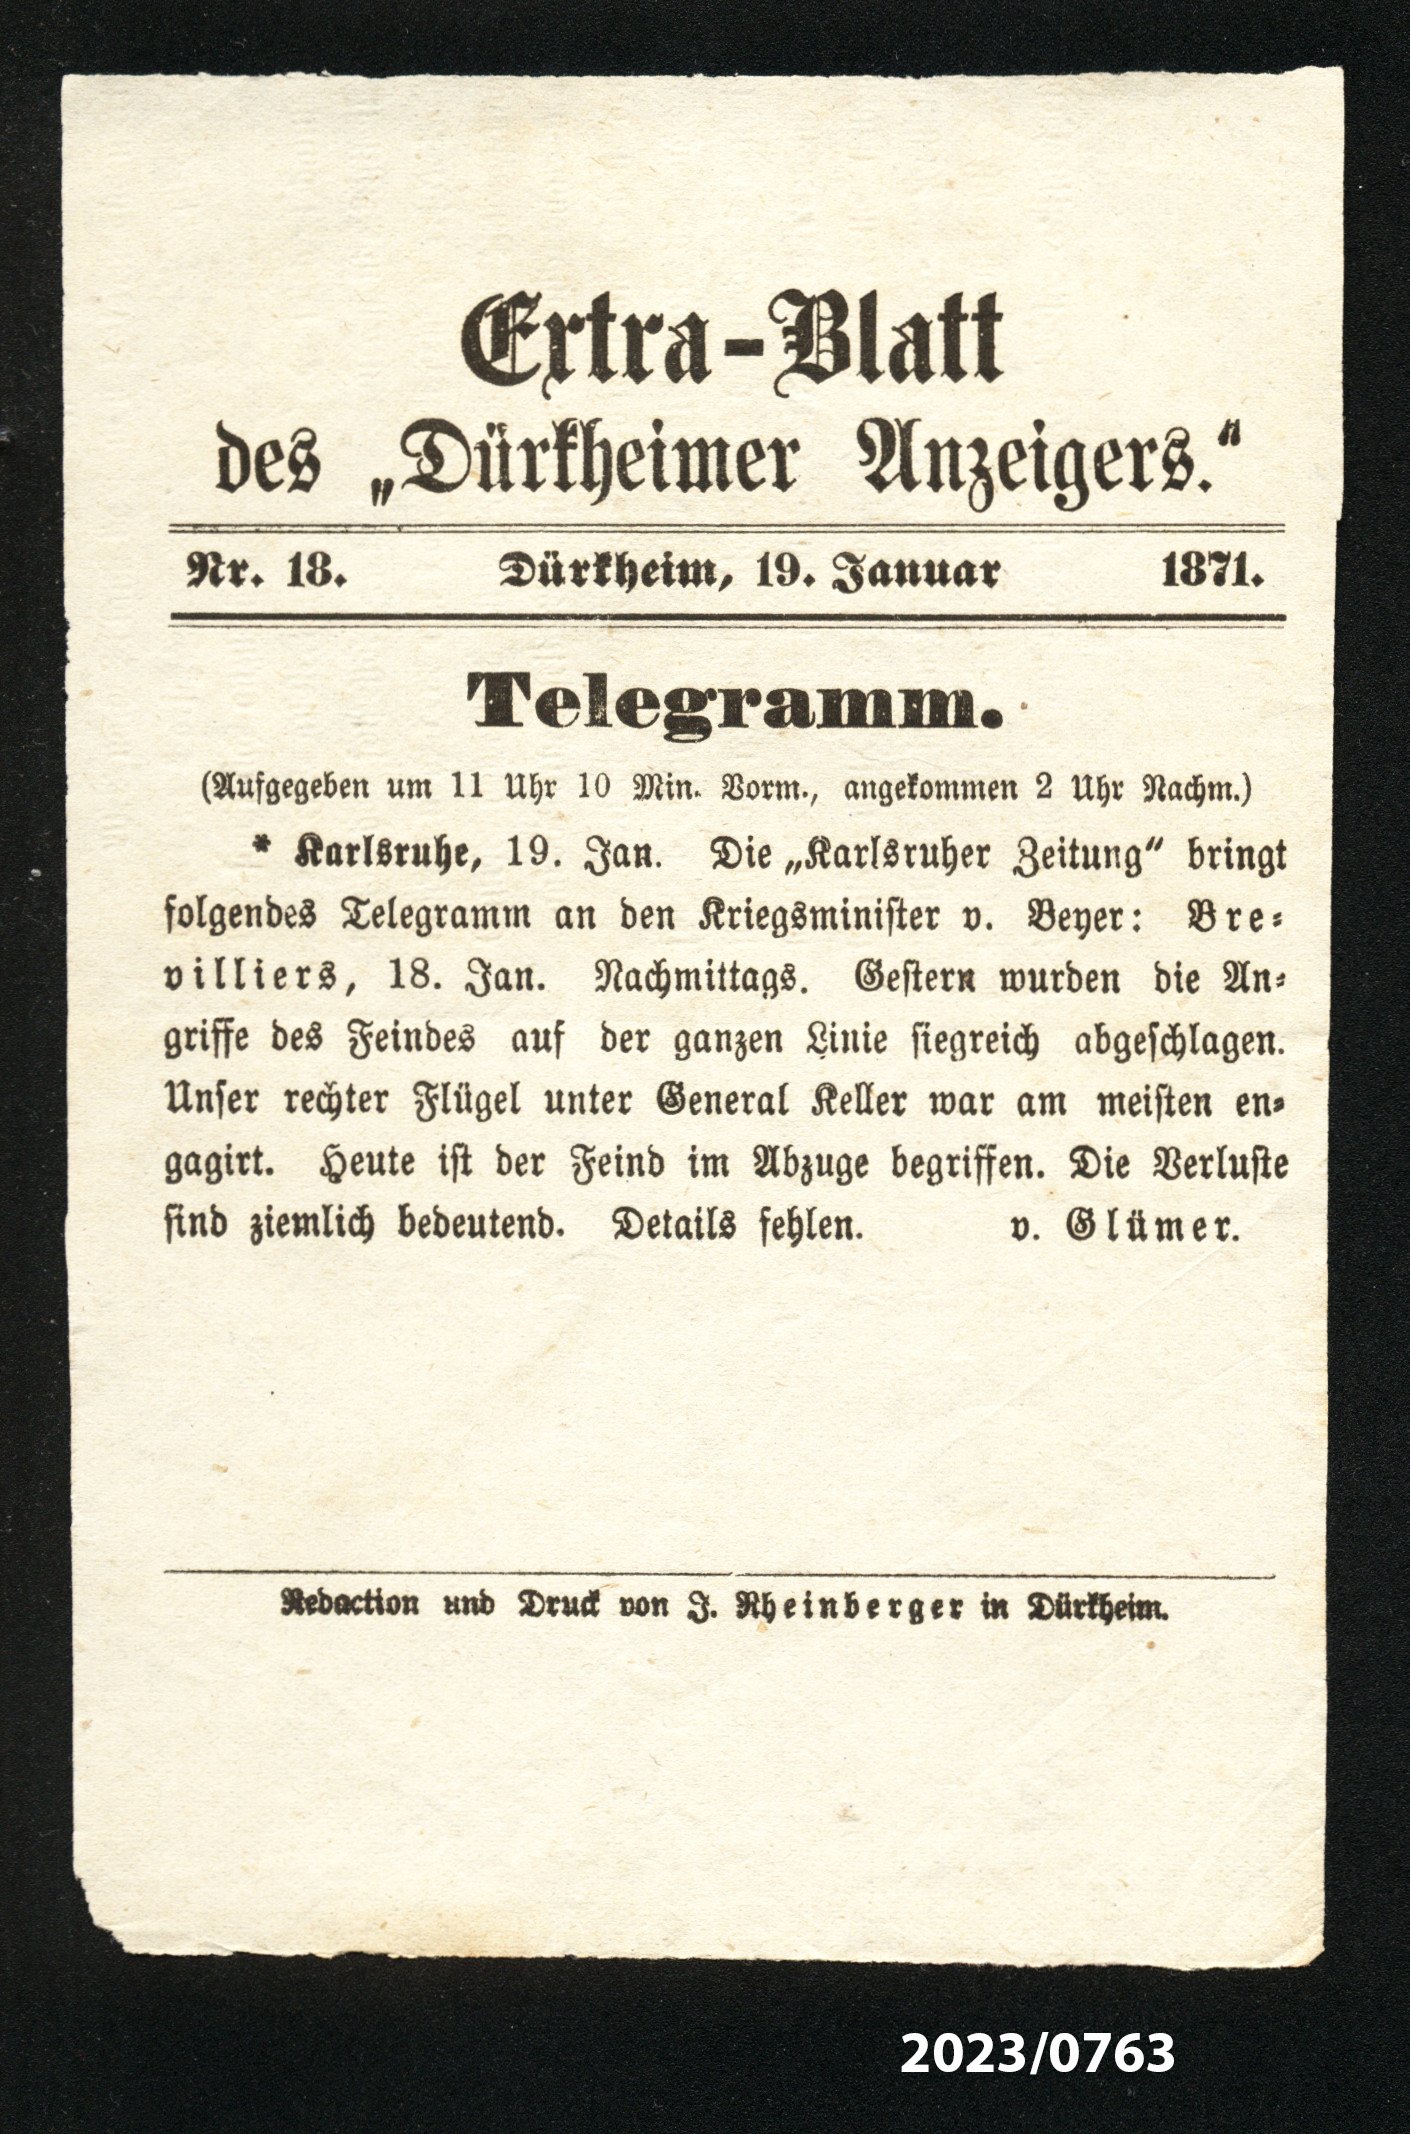 Extra-Blatt des "Dürkheimer Anzeigers." Nr. 18, 19.1.1871 (Stadtmuseum Bad Dürkheim im Kulturzentrum Haus Catoir CC BY-NC-SA)